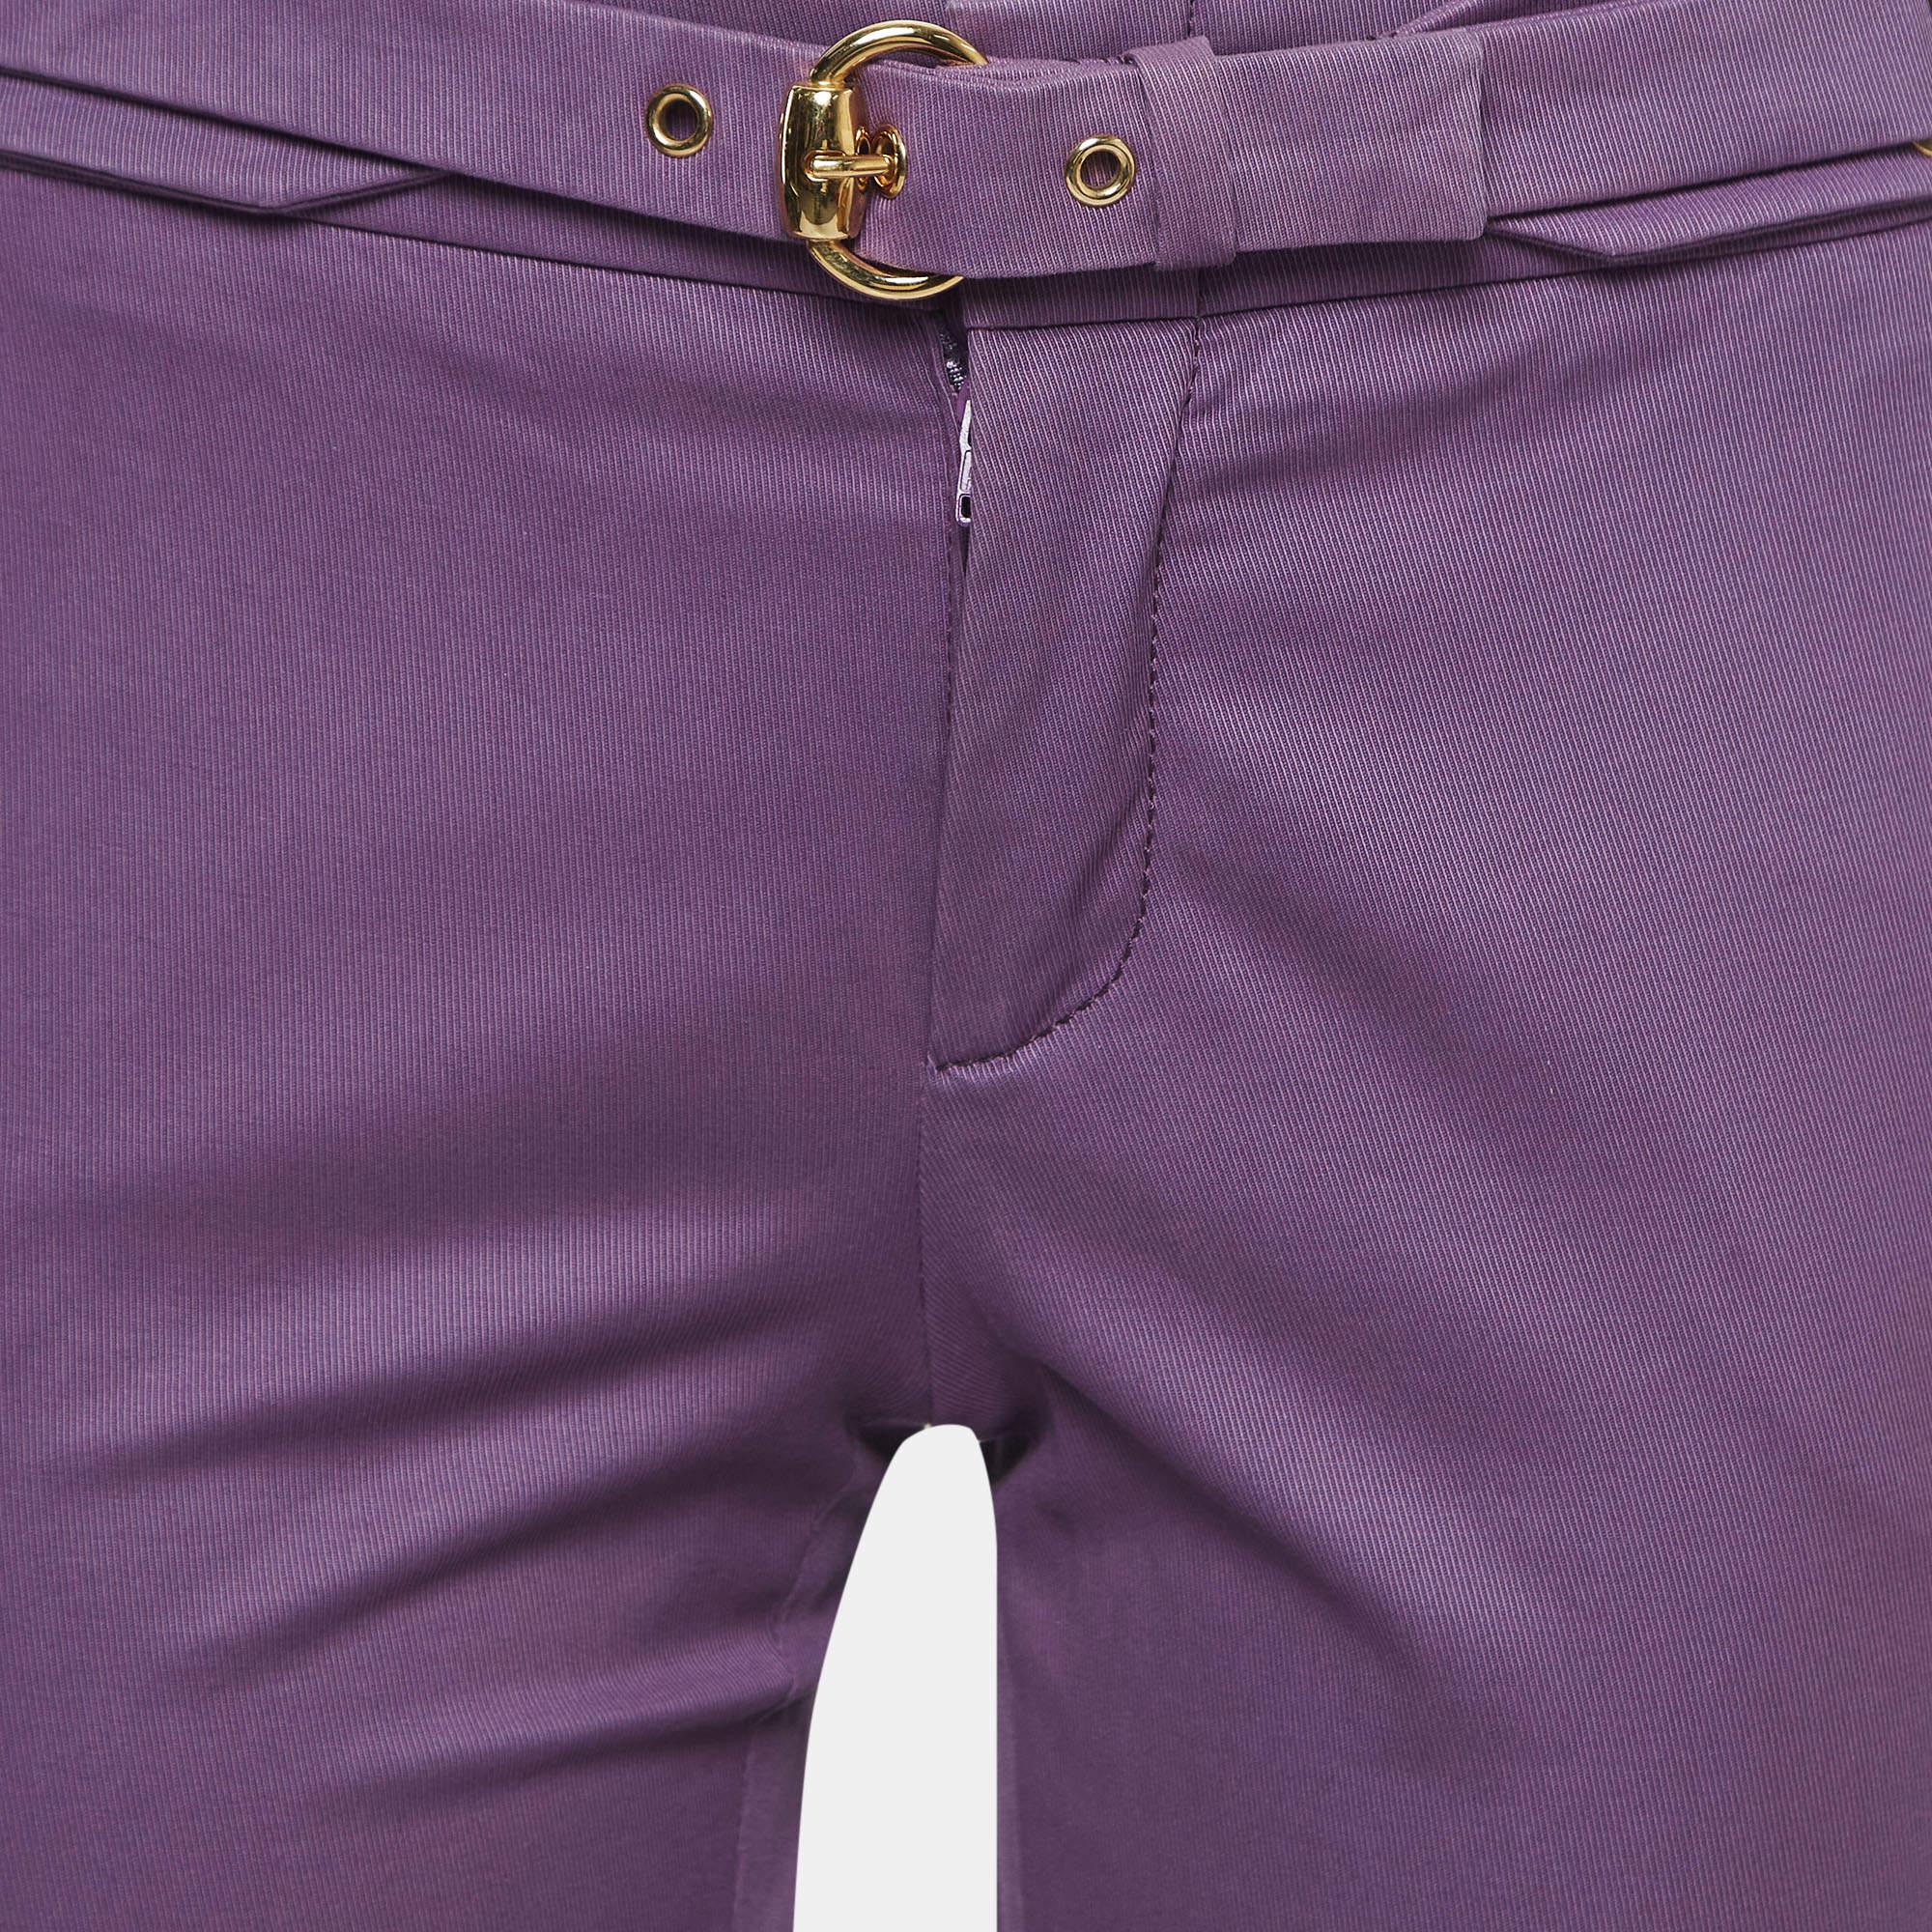 Gucci Purple Cotton Twill Belted Straight Leg Pants M In Good Condition For Sale In Dubai, Al Qouz 2